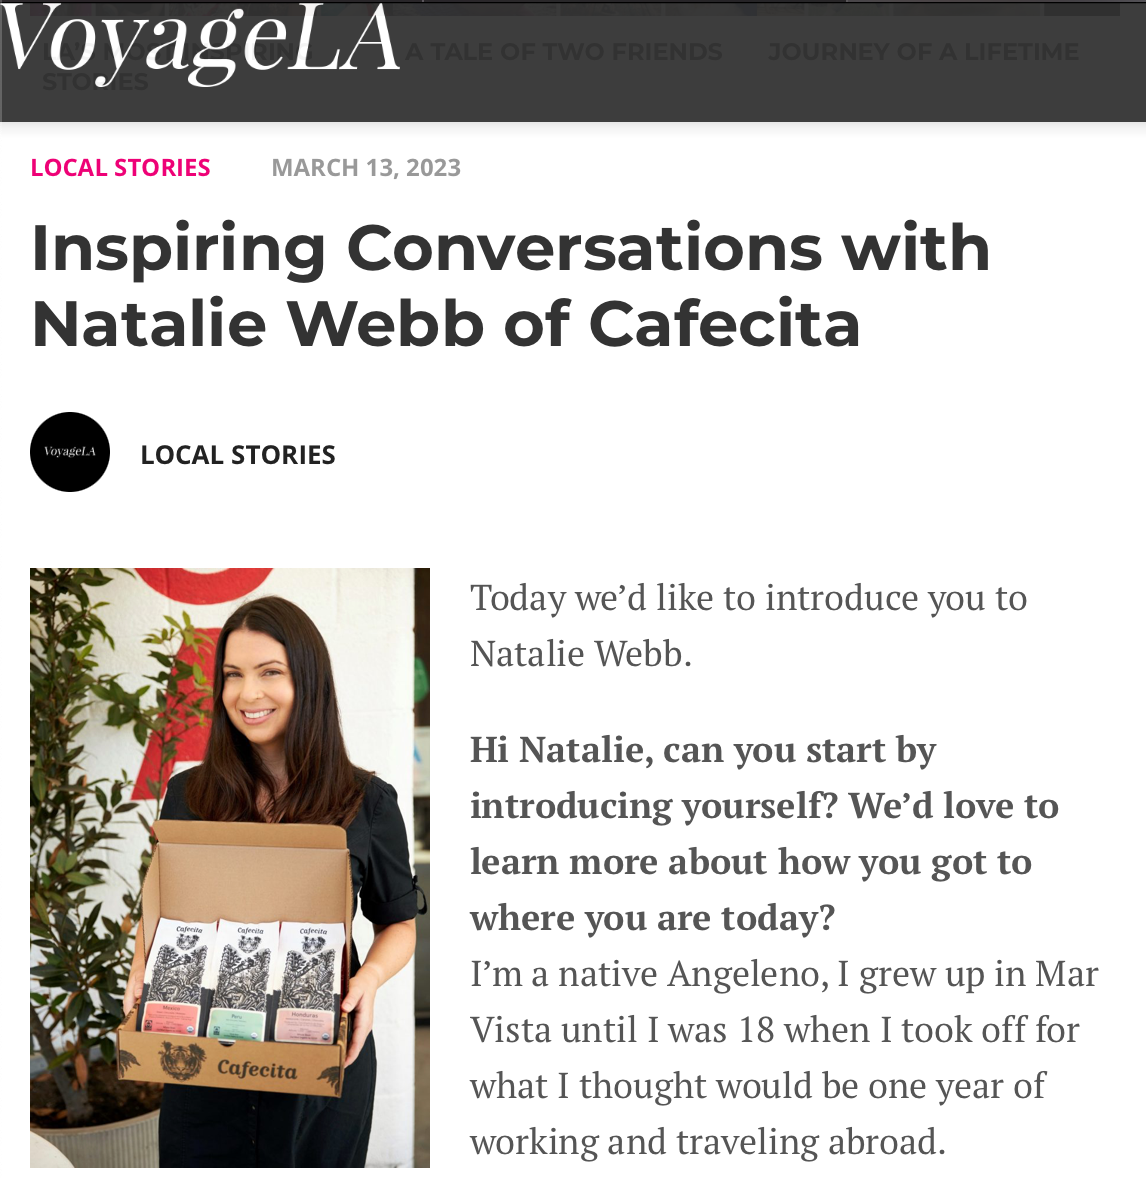 Voyage LA Inspiring Conversations with Natalie Webb of Cafecita